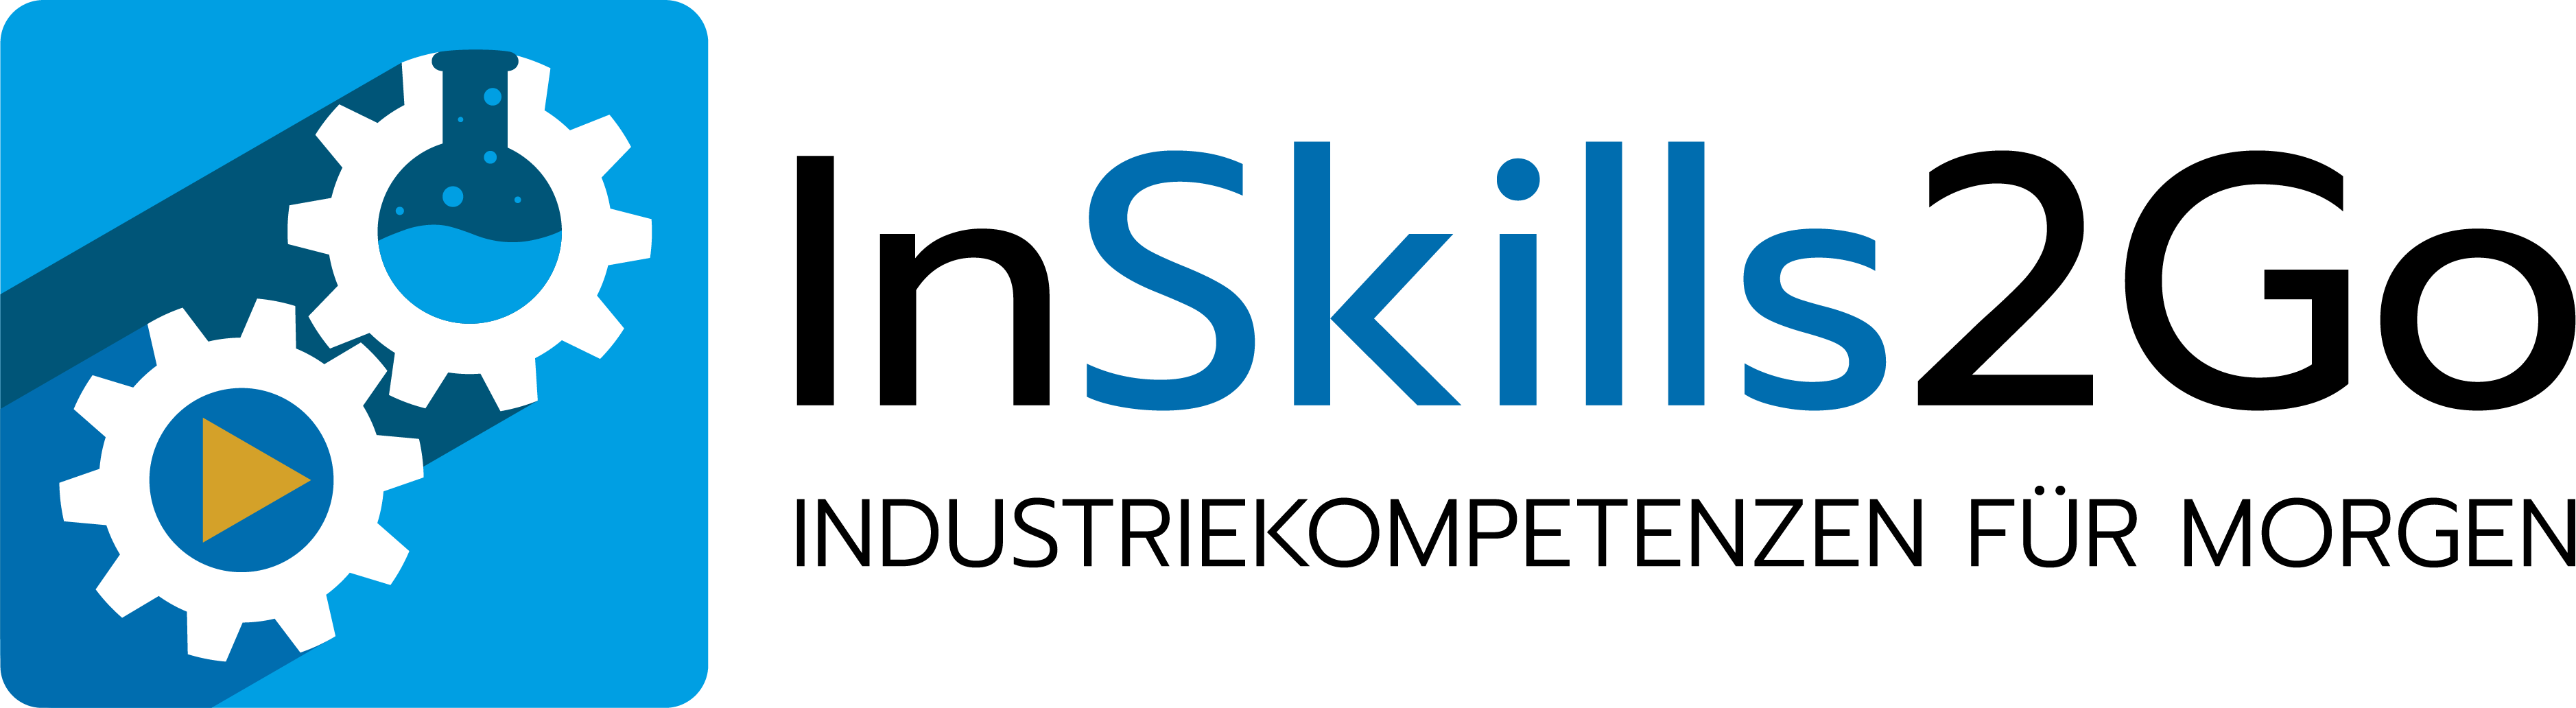 InSkills2Go - Logo